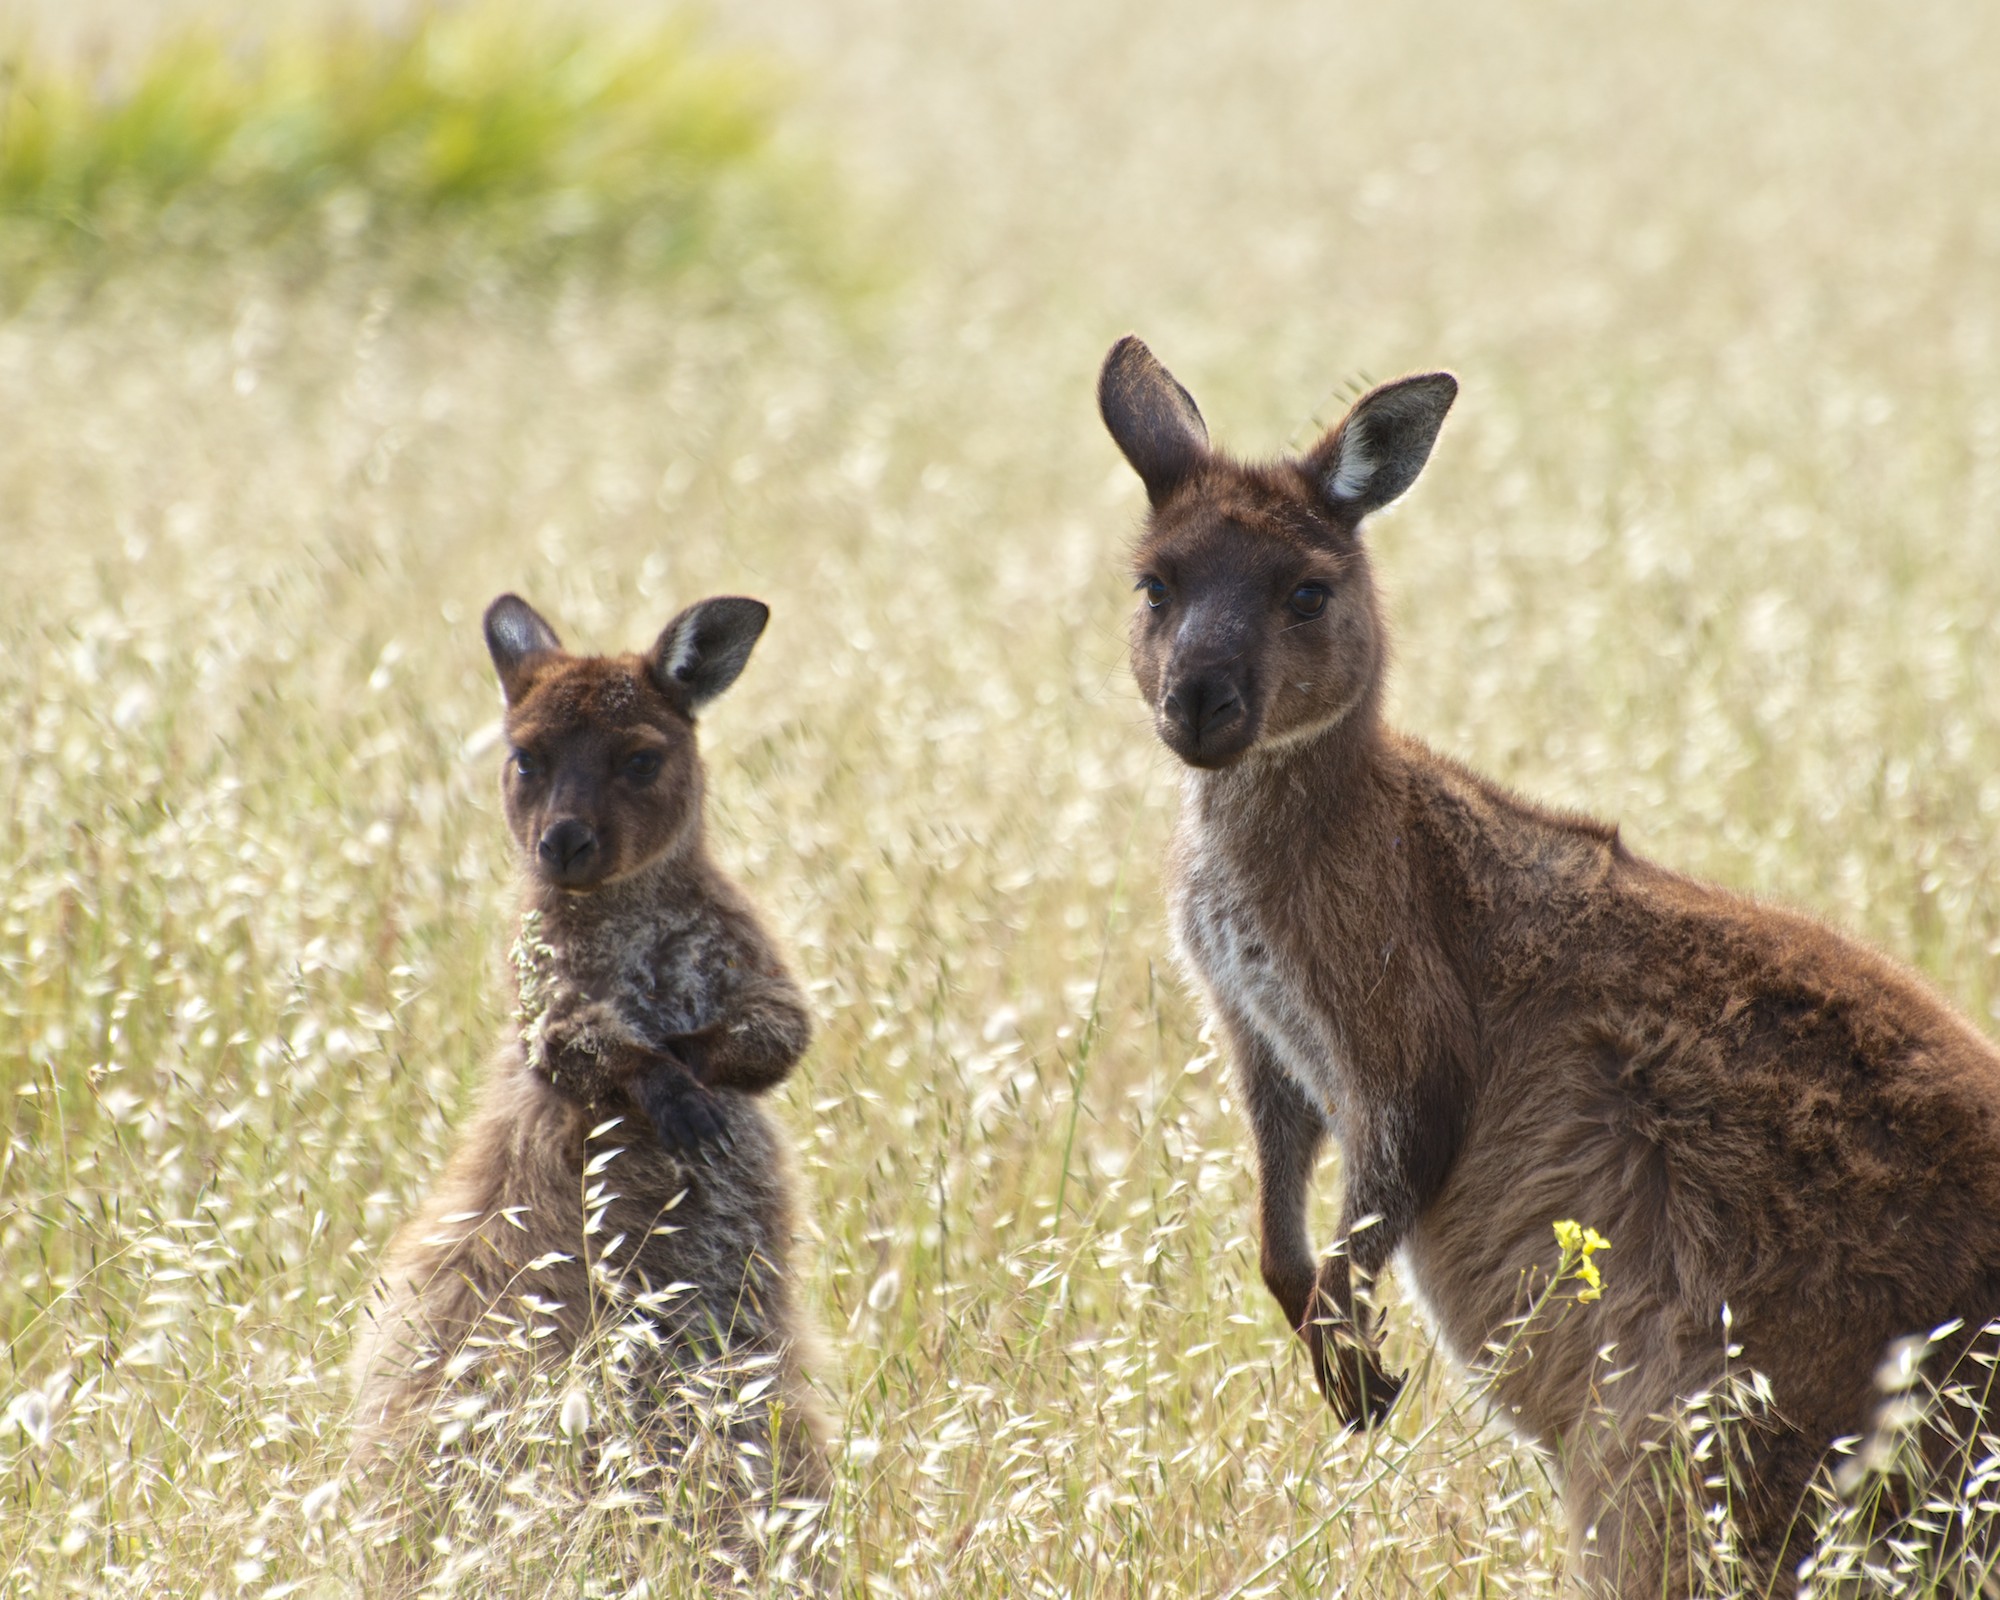 Mother and child, Kangaroo Island